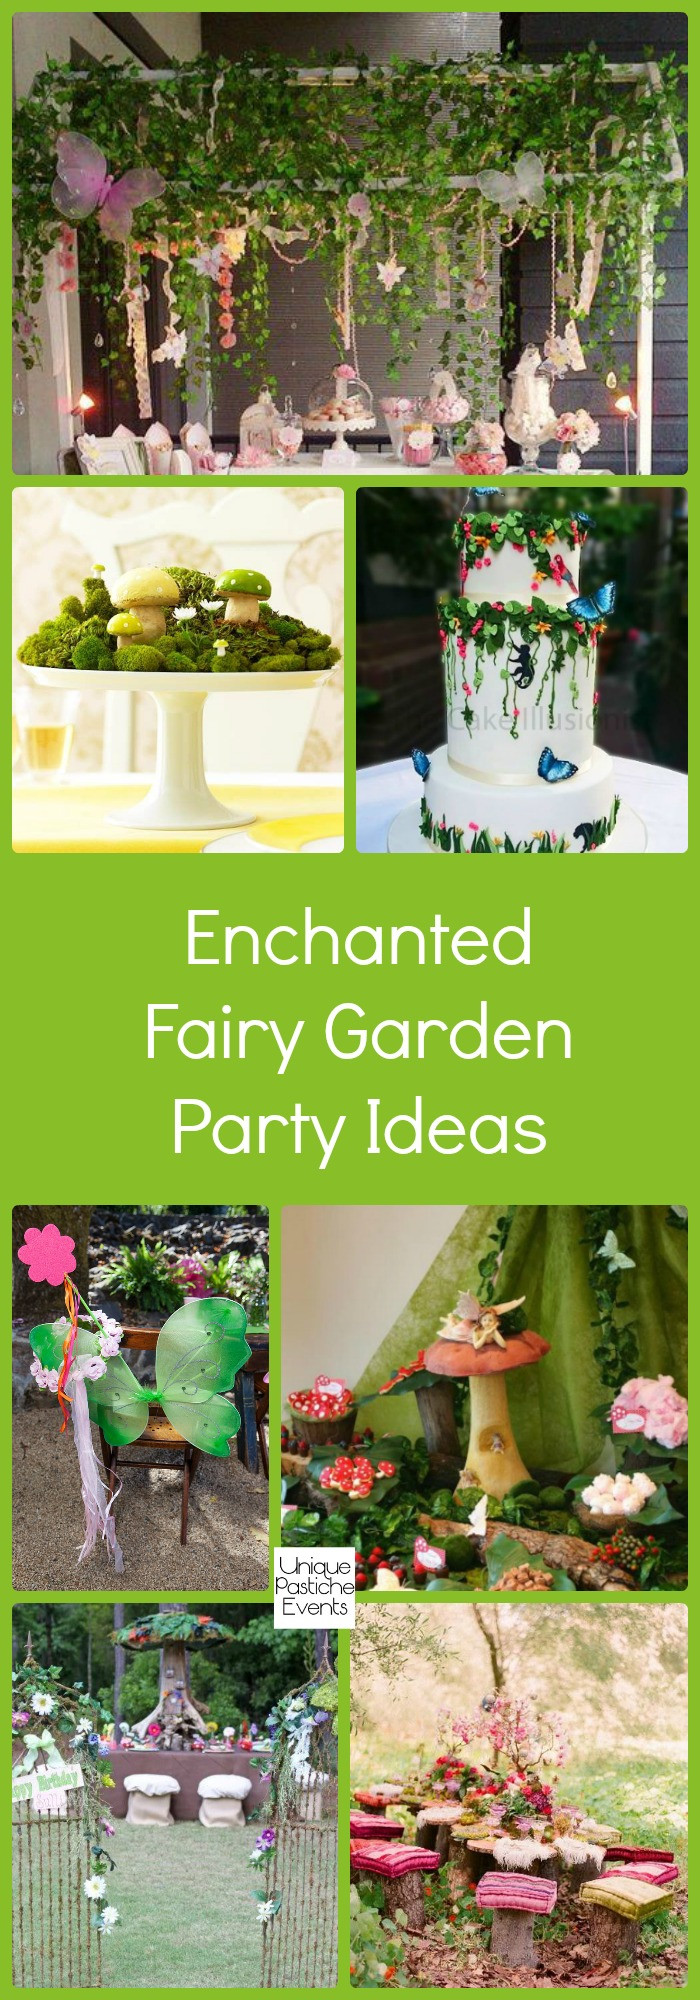 Kids Garden Party Ideas
 Children’s Party Inspiration